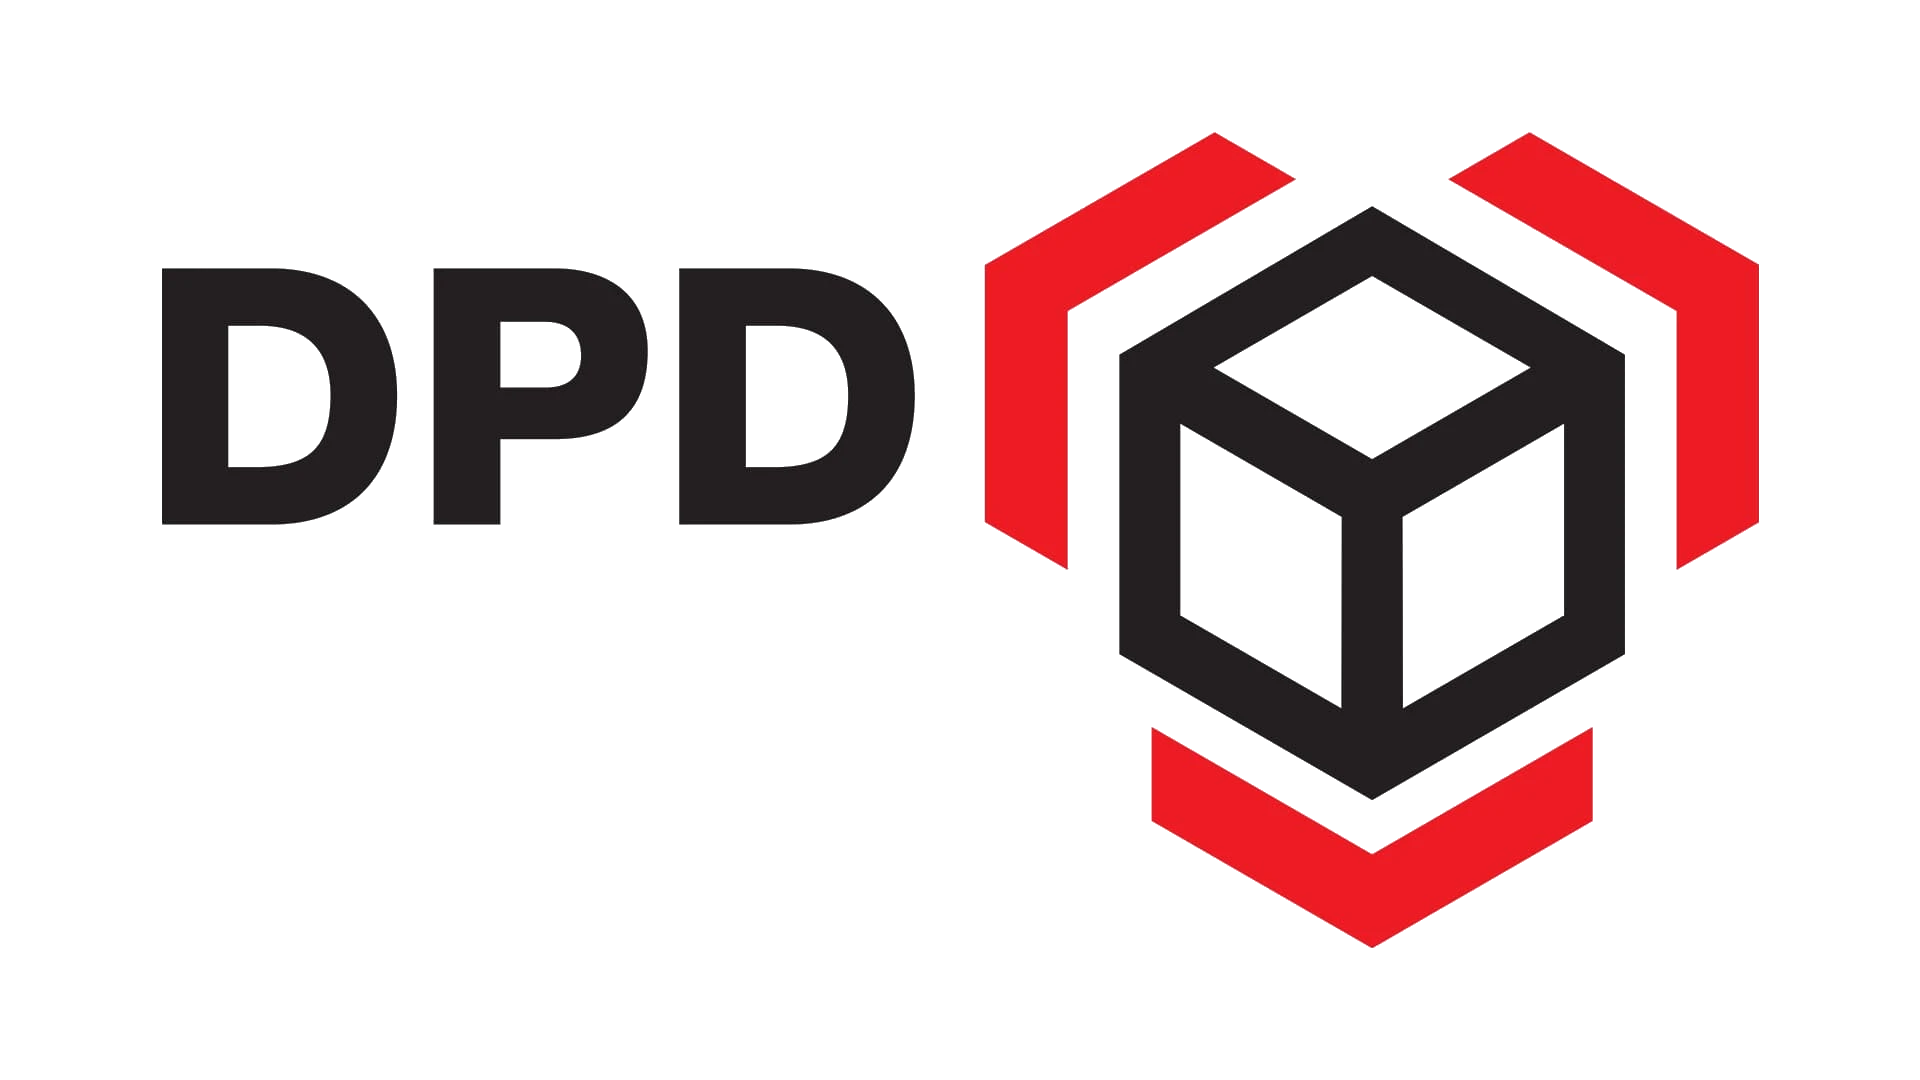 Standard DPD